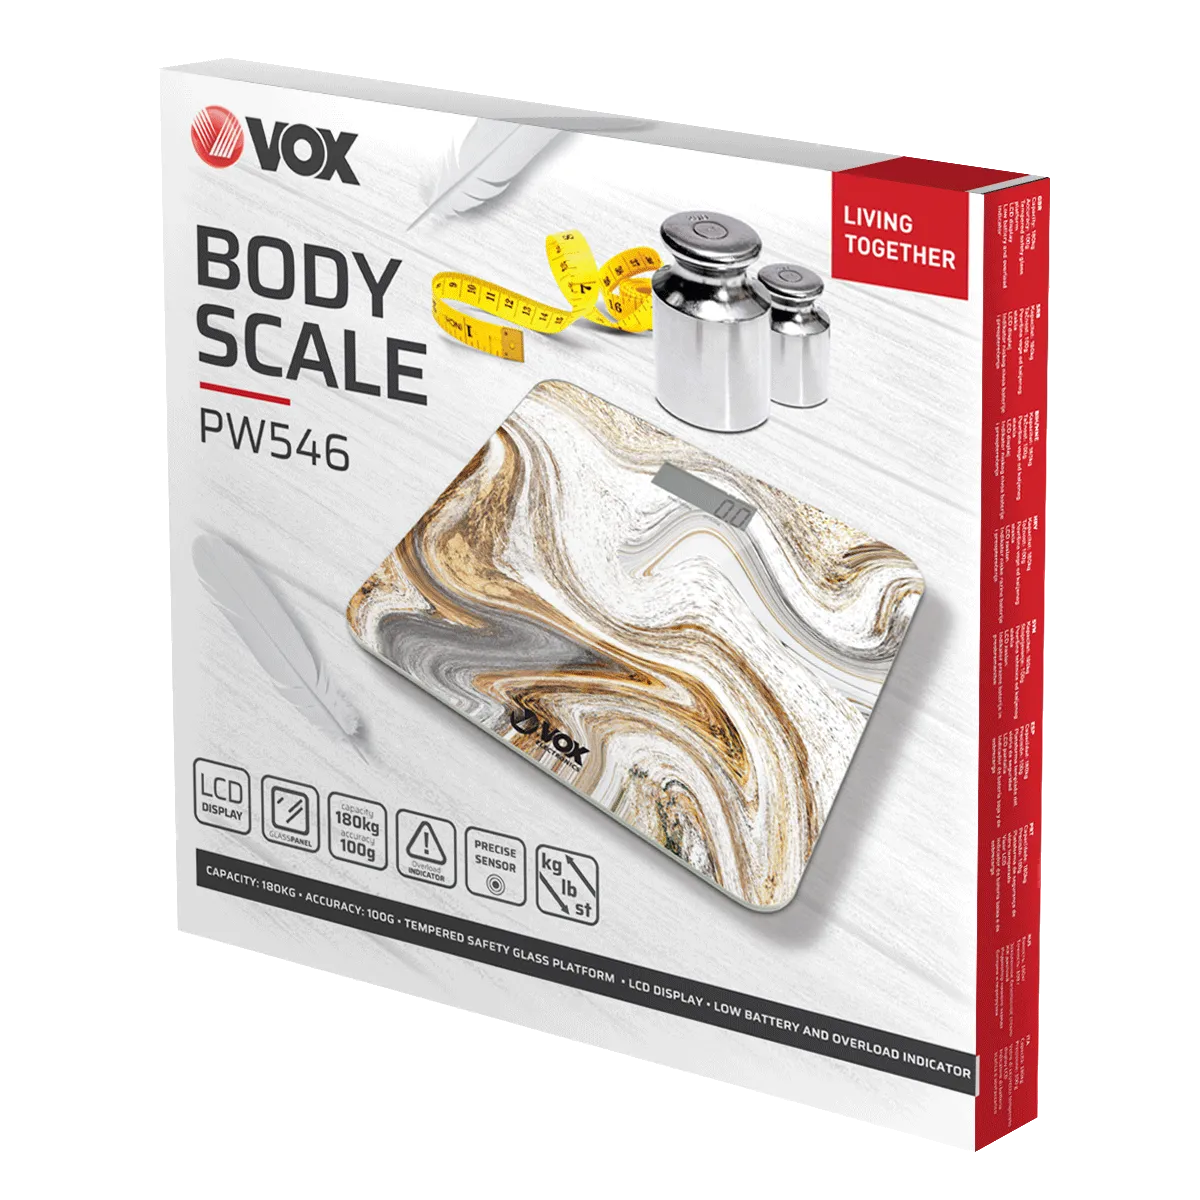 Body scale PW 546 